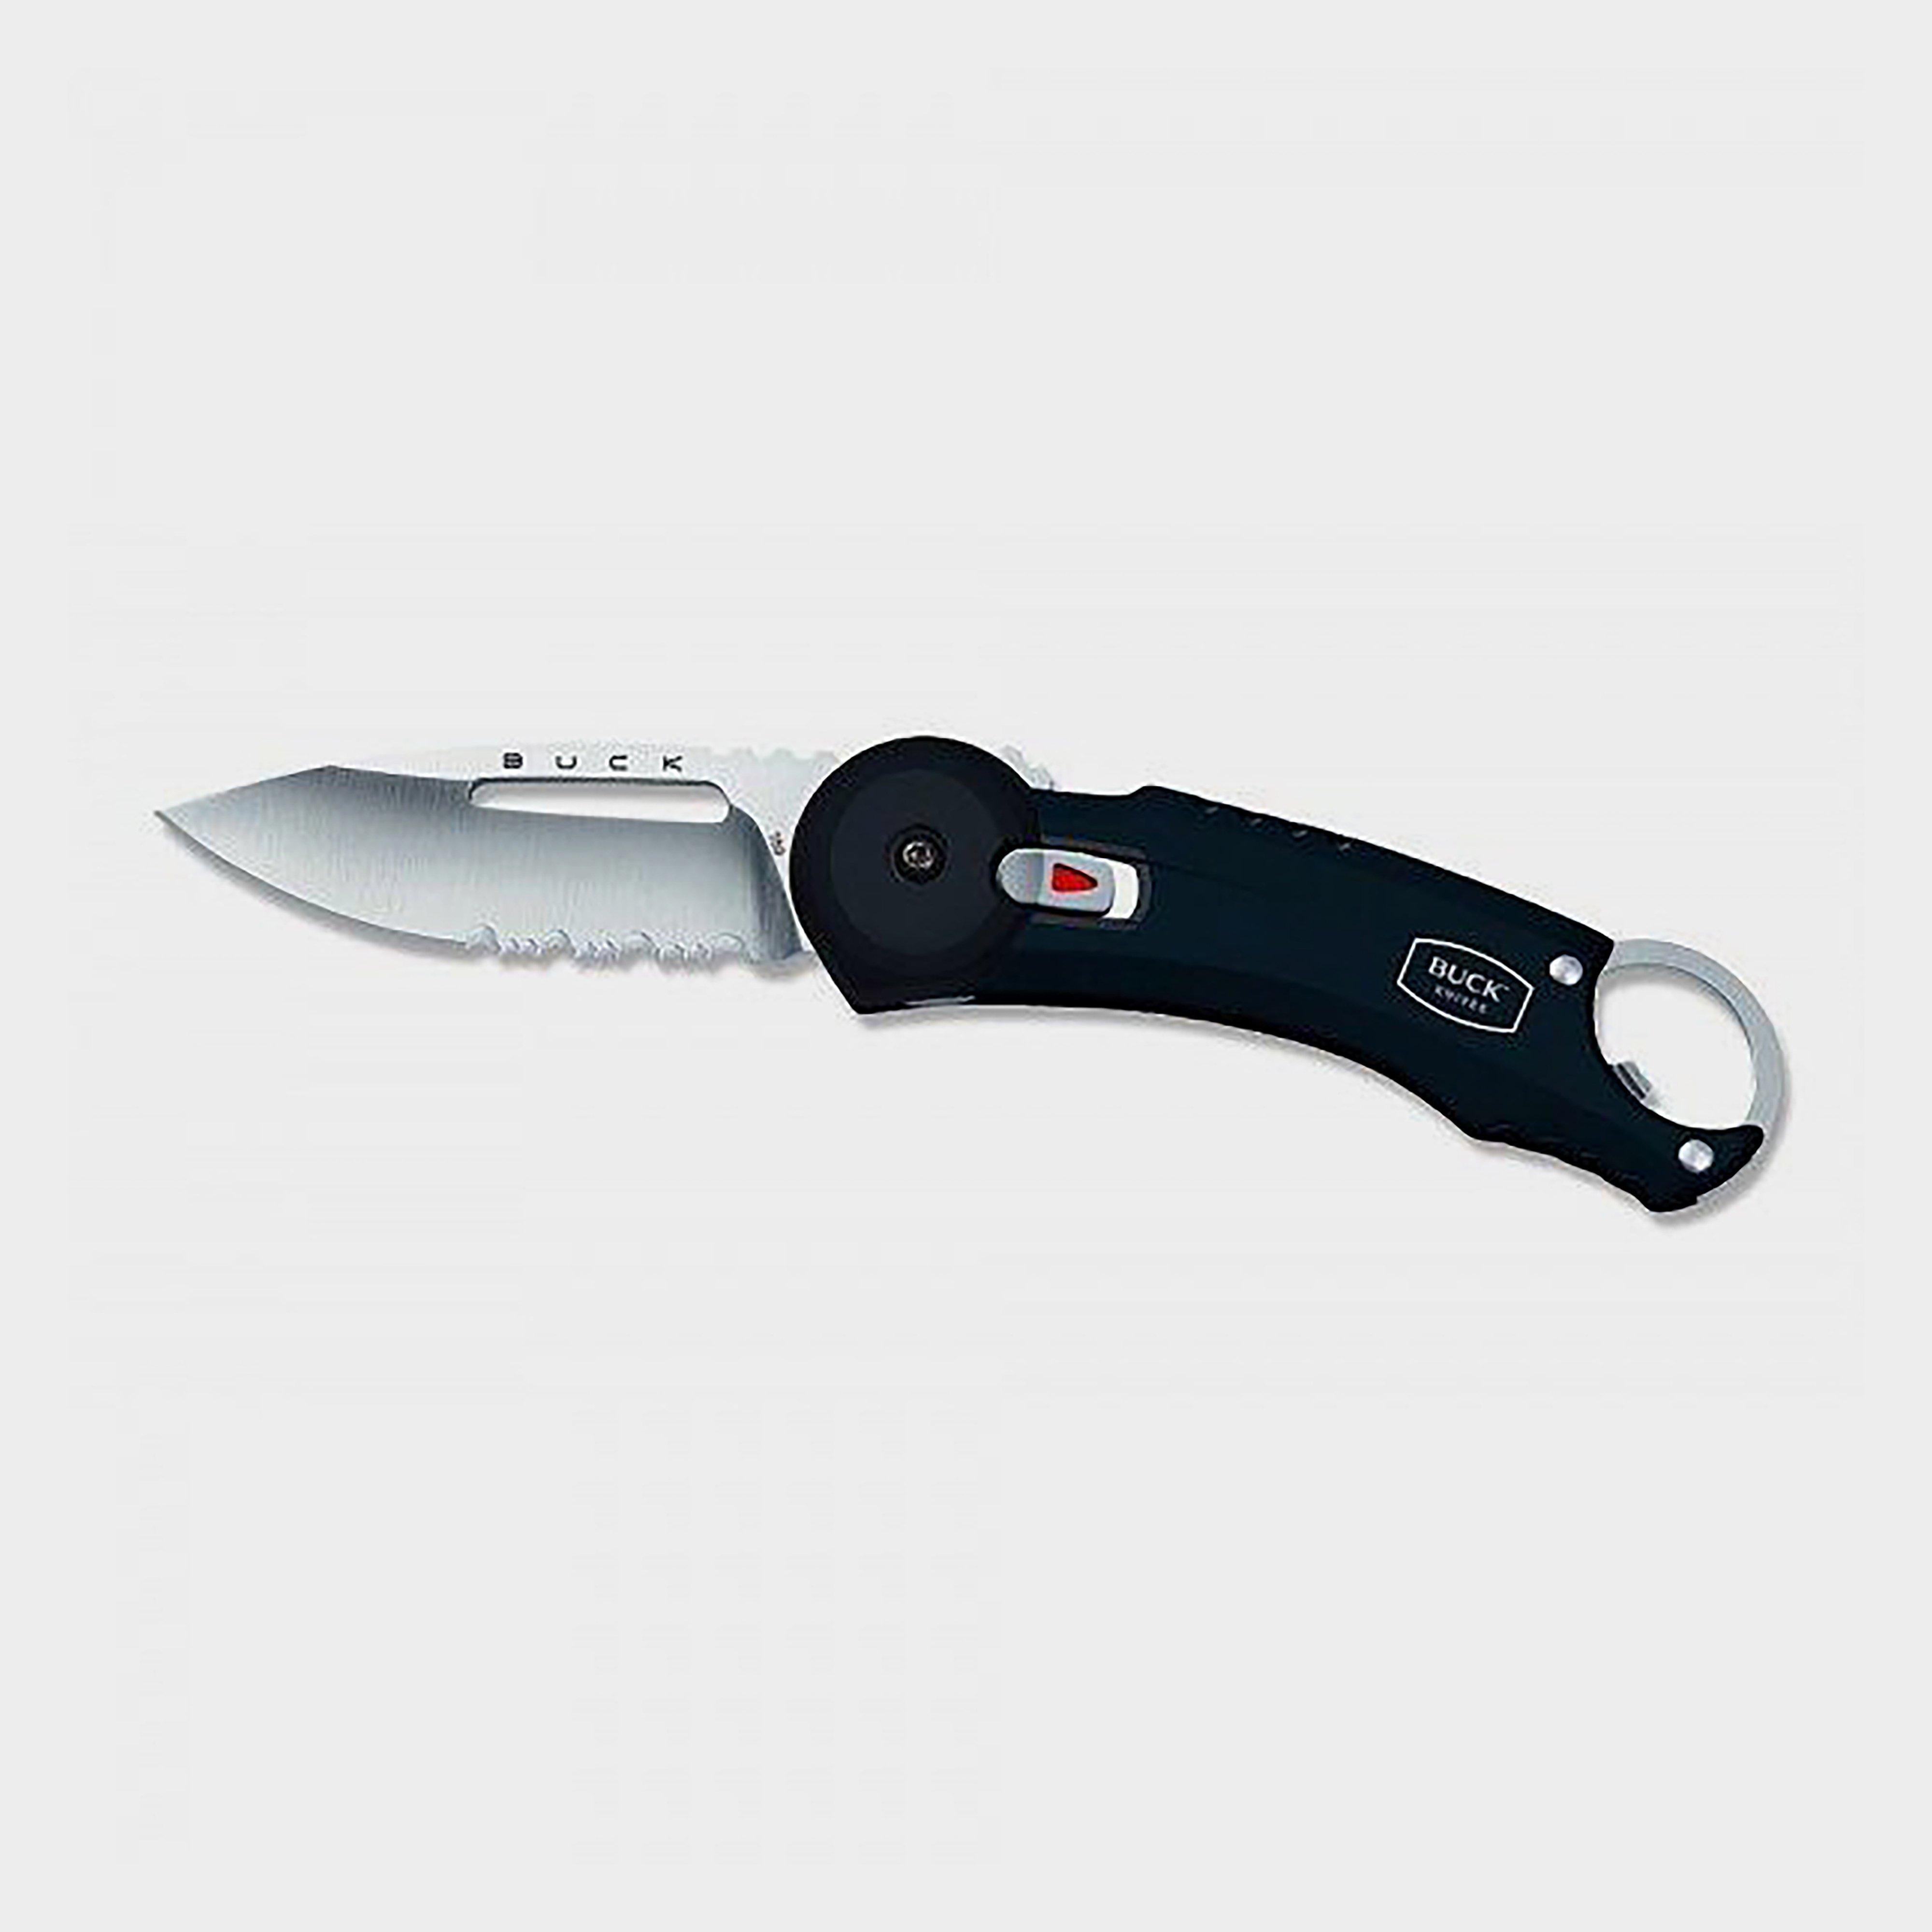 Buck 750 Redpoint Knife, KNIFE